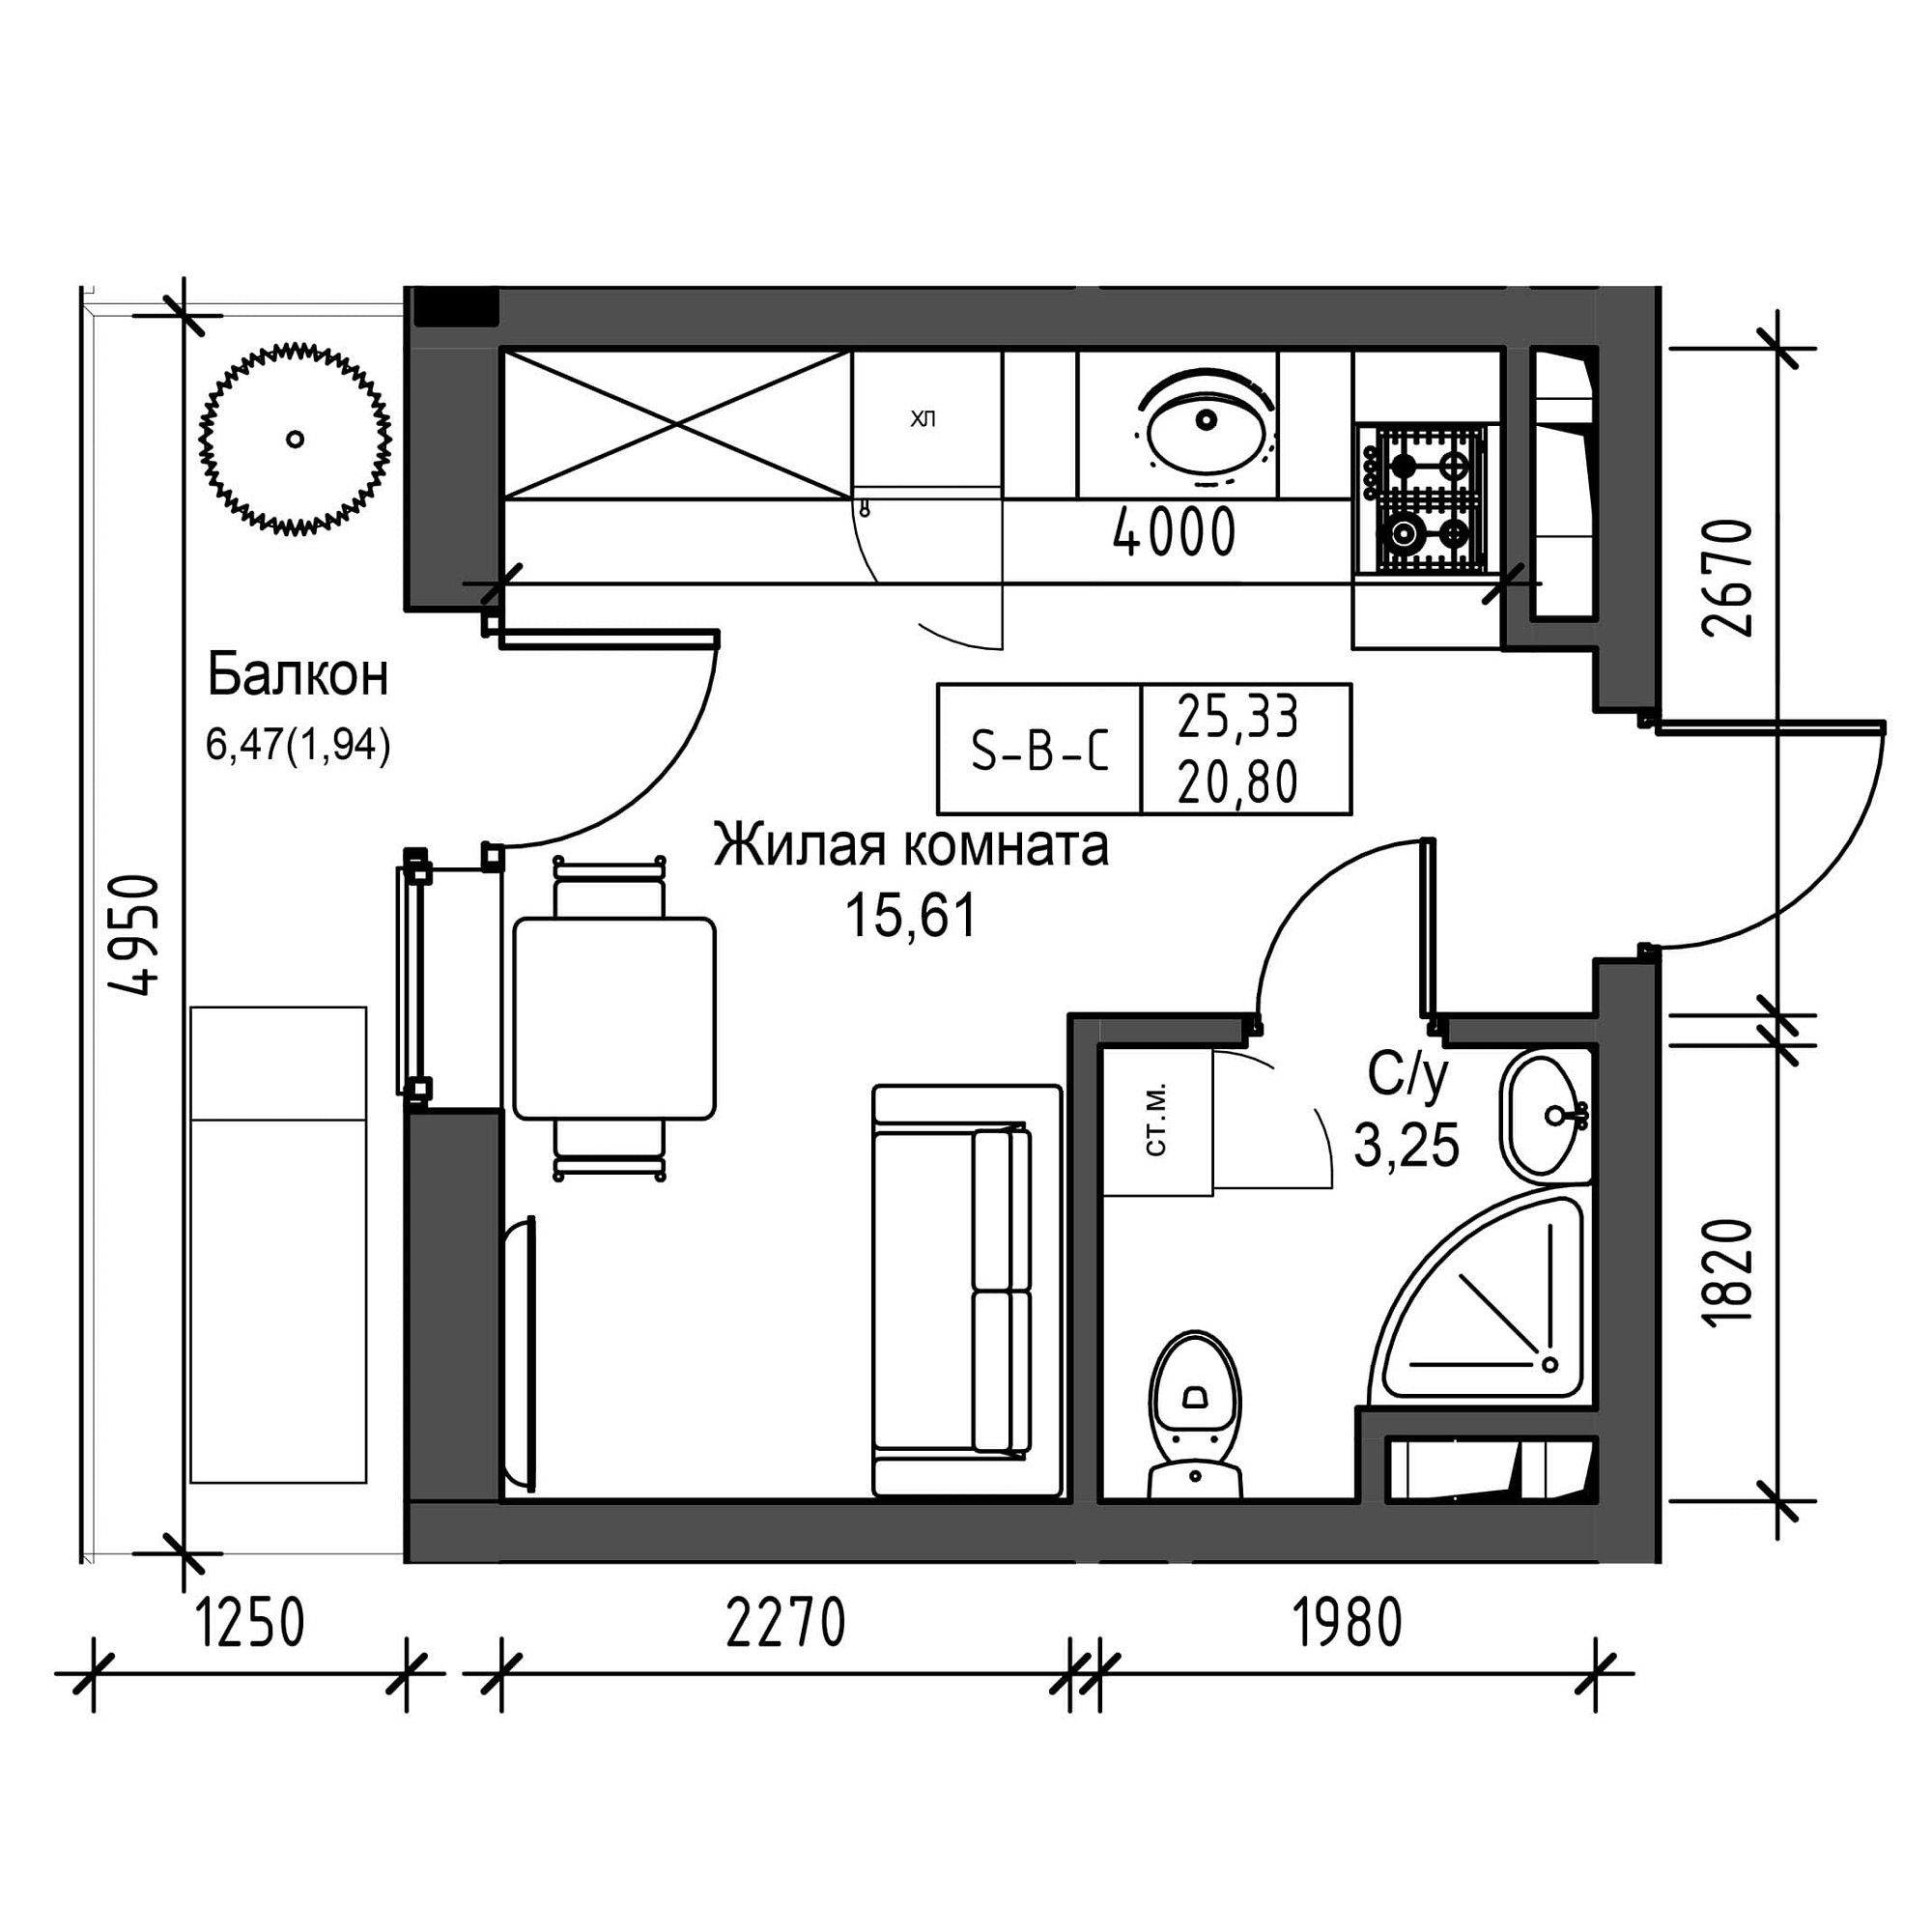 Планування Smart-квартира площею 20.8м2, UM-001-04/0018.